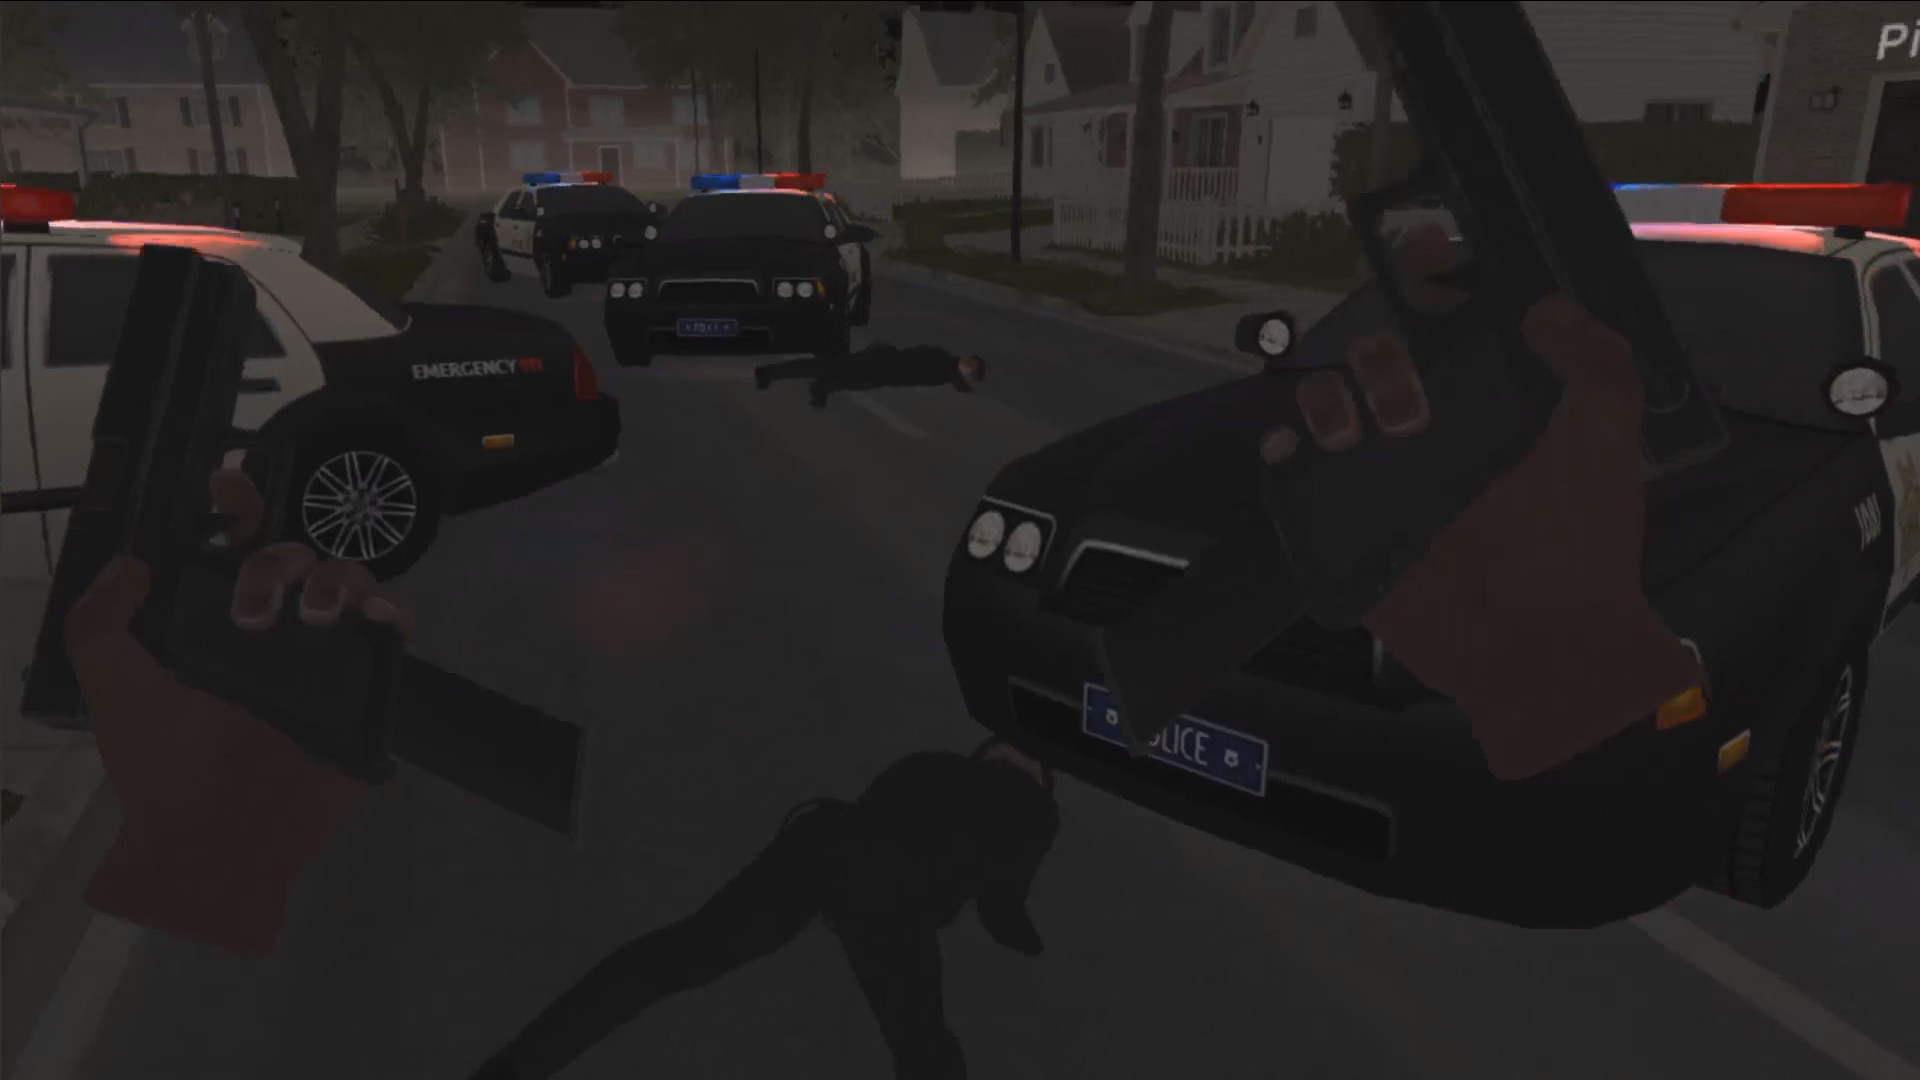 TYRONE vs COPS VR